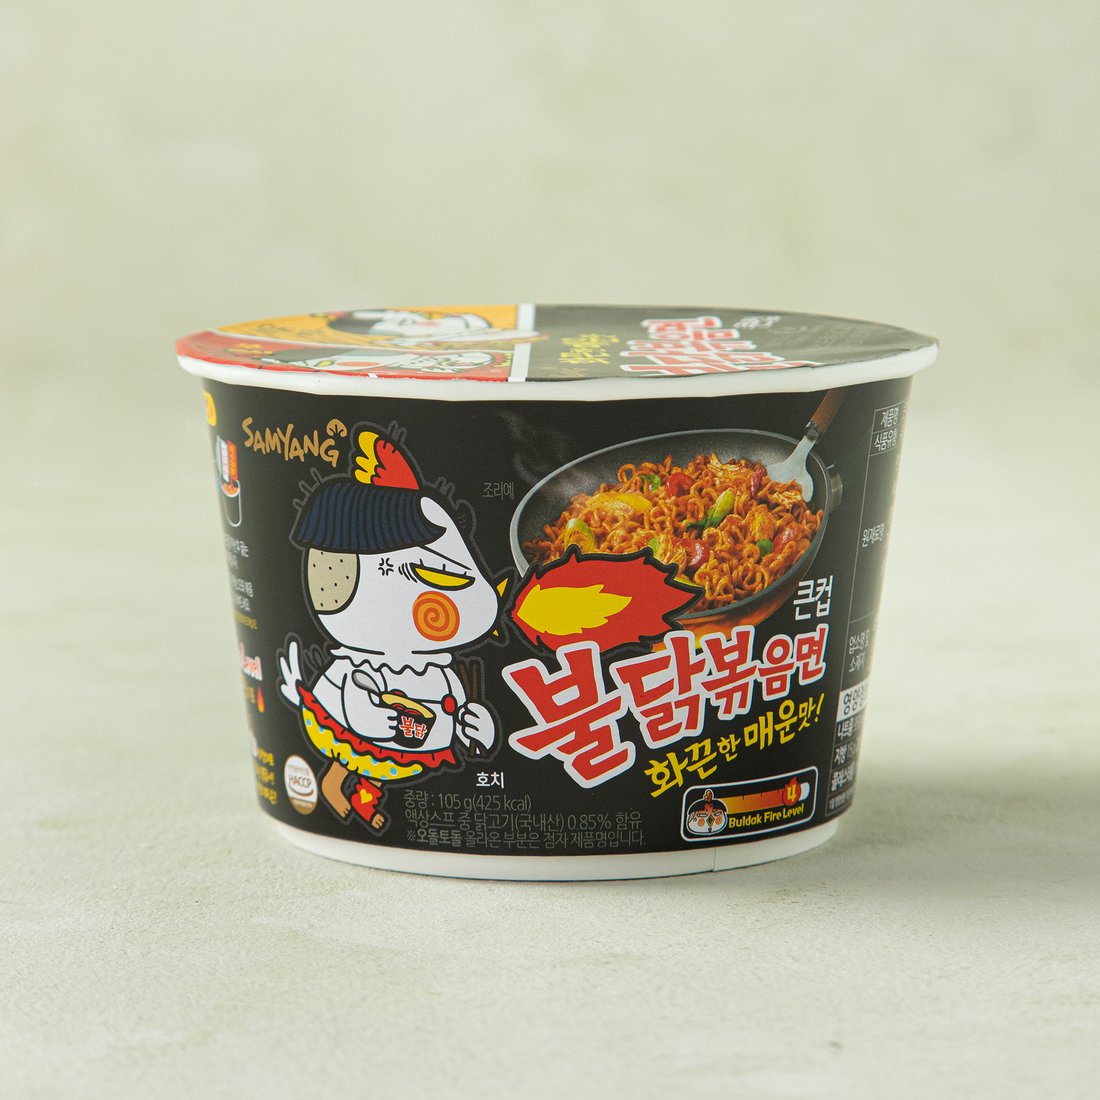 Samyang Big Cup Buldak Stir-Fried Noodles 105g/삼양 불닭볶음면 큰컵 105g